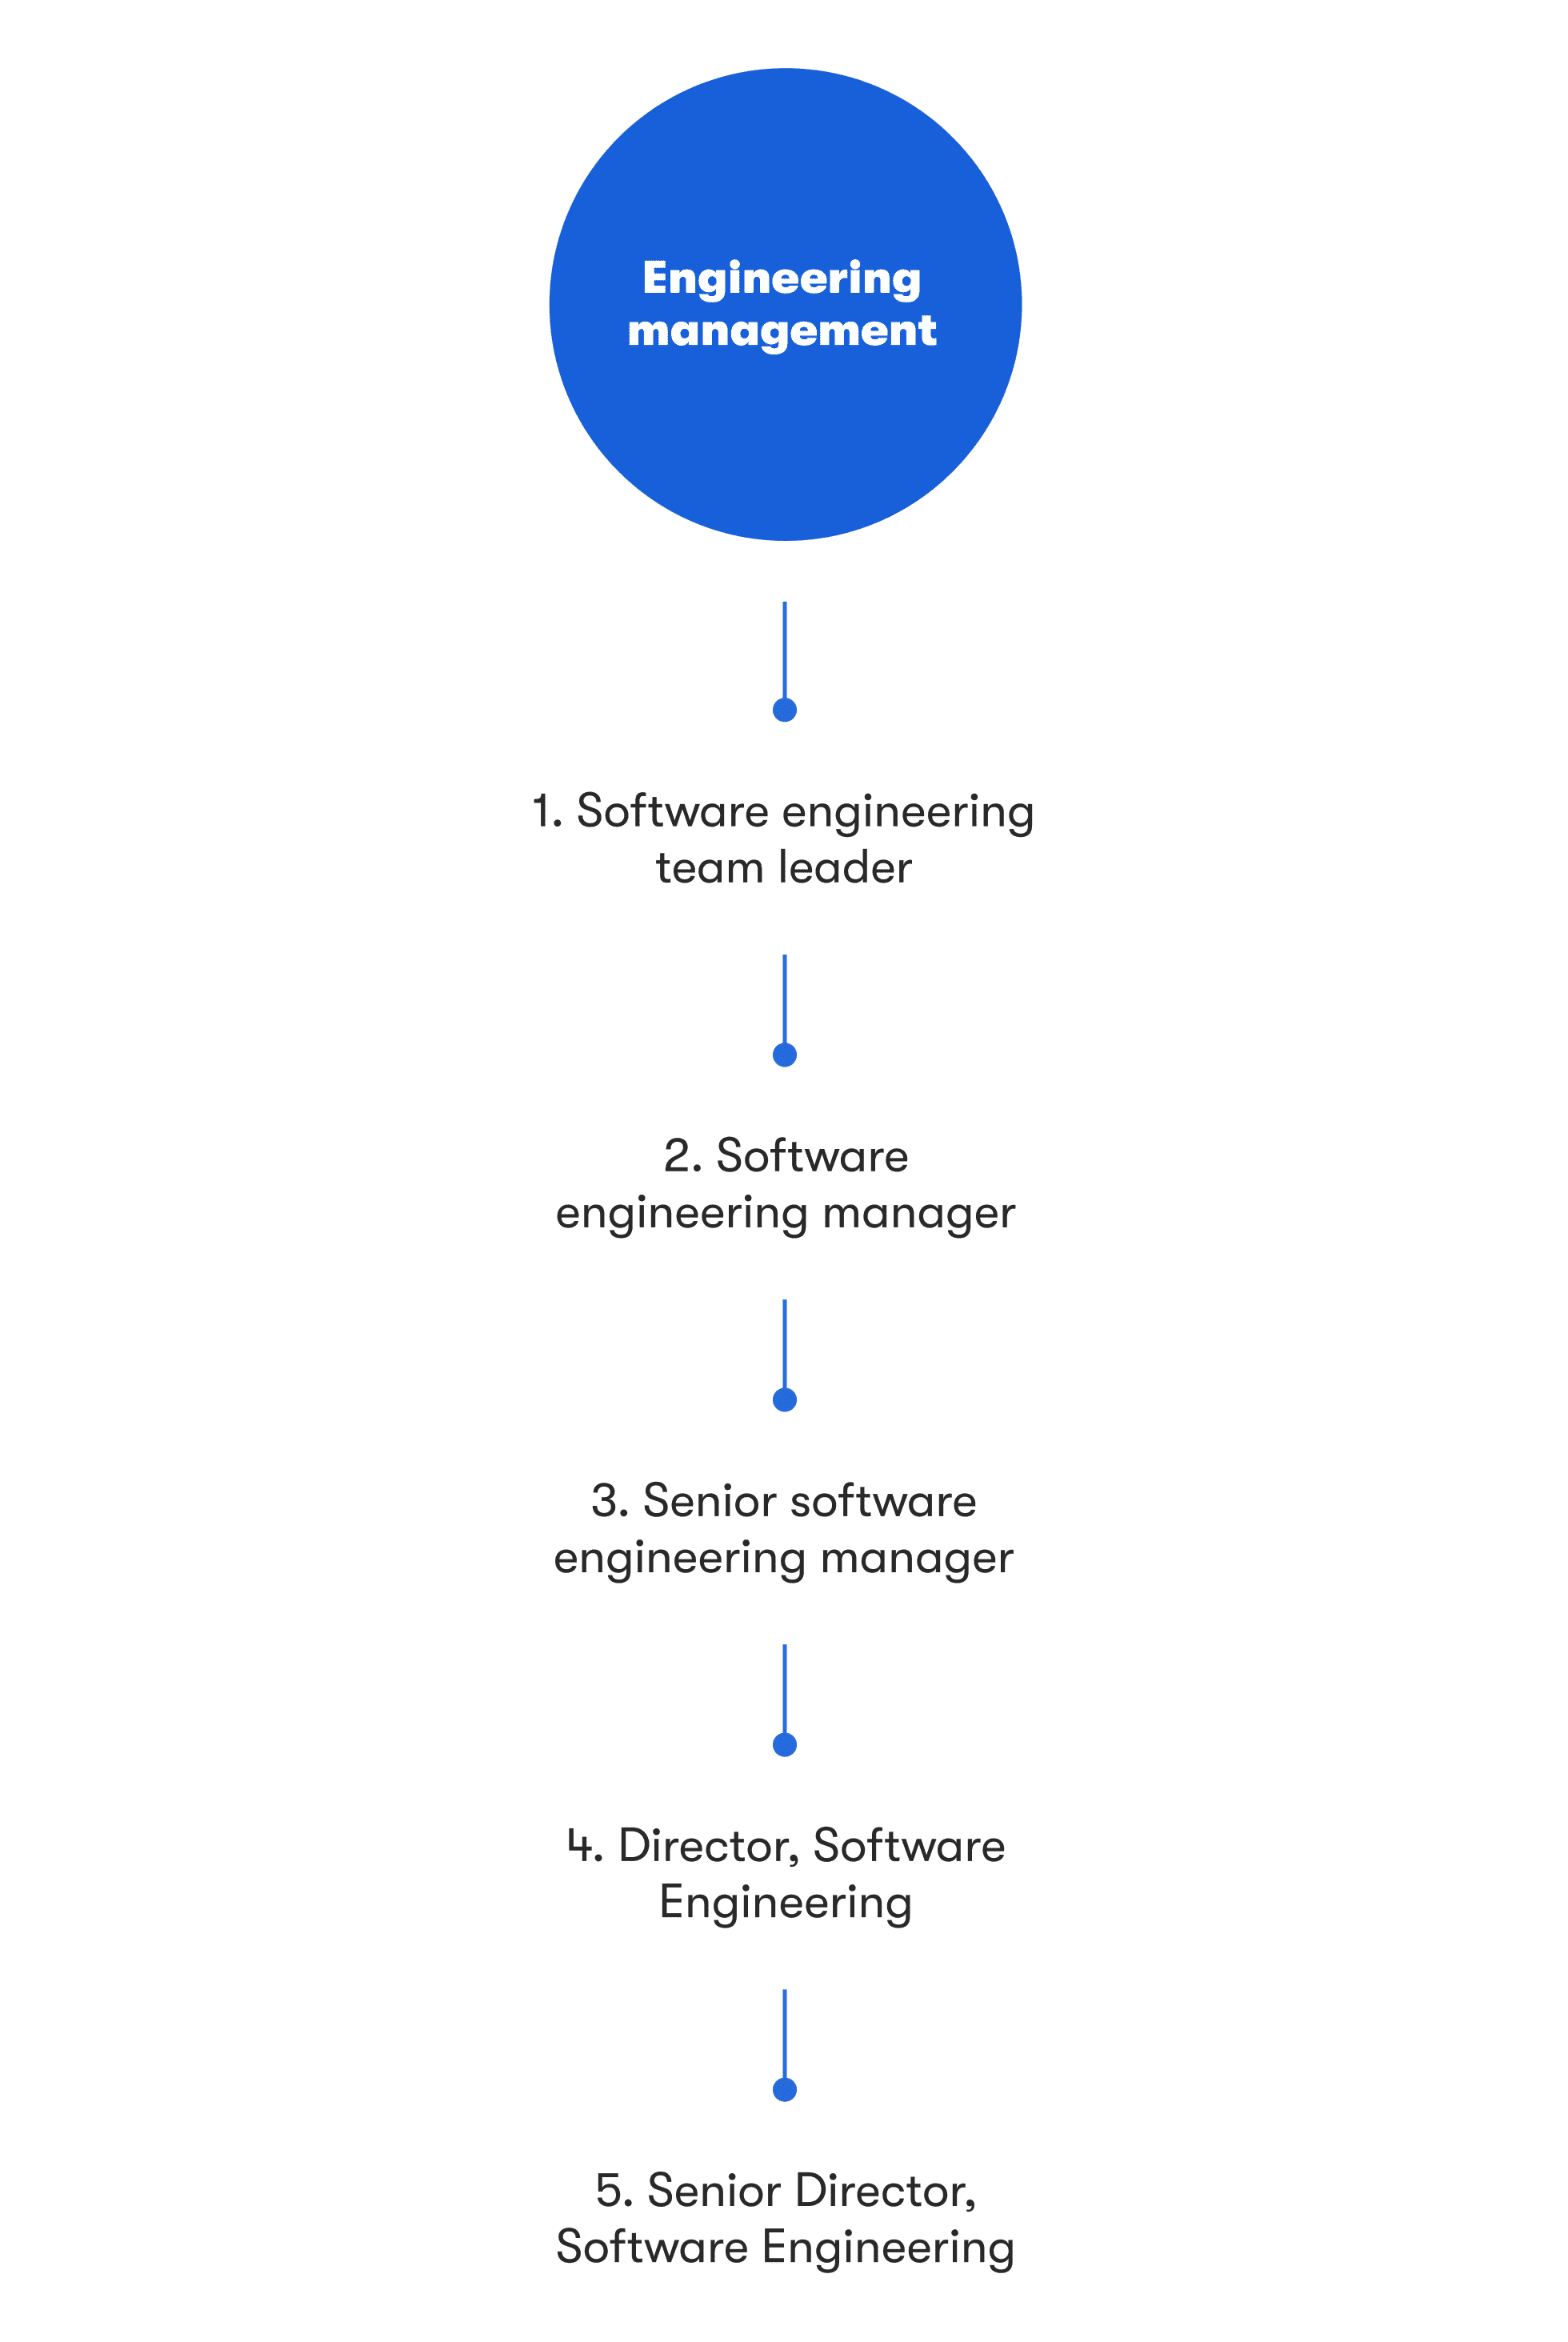 Engineering management career path